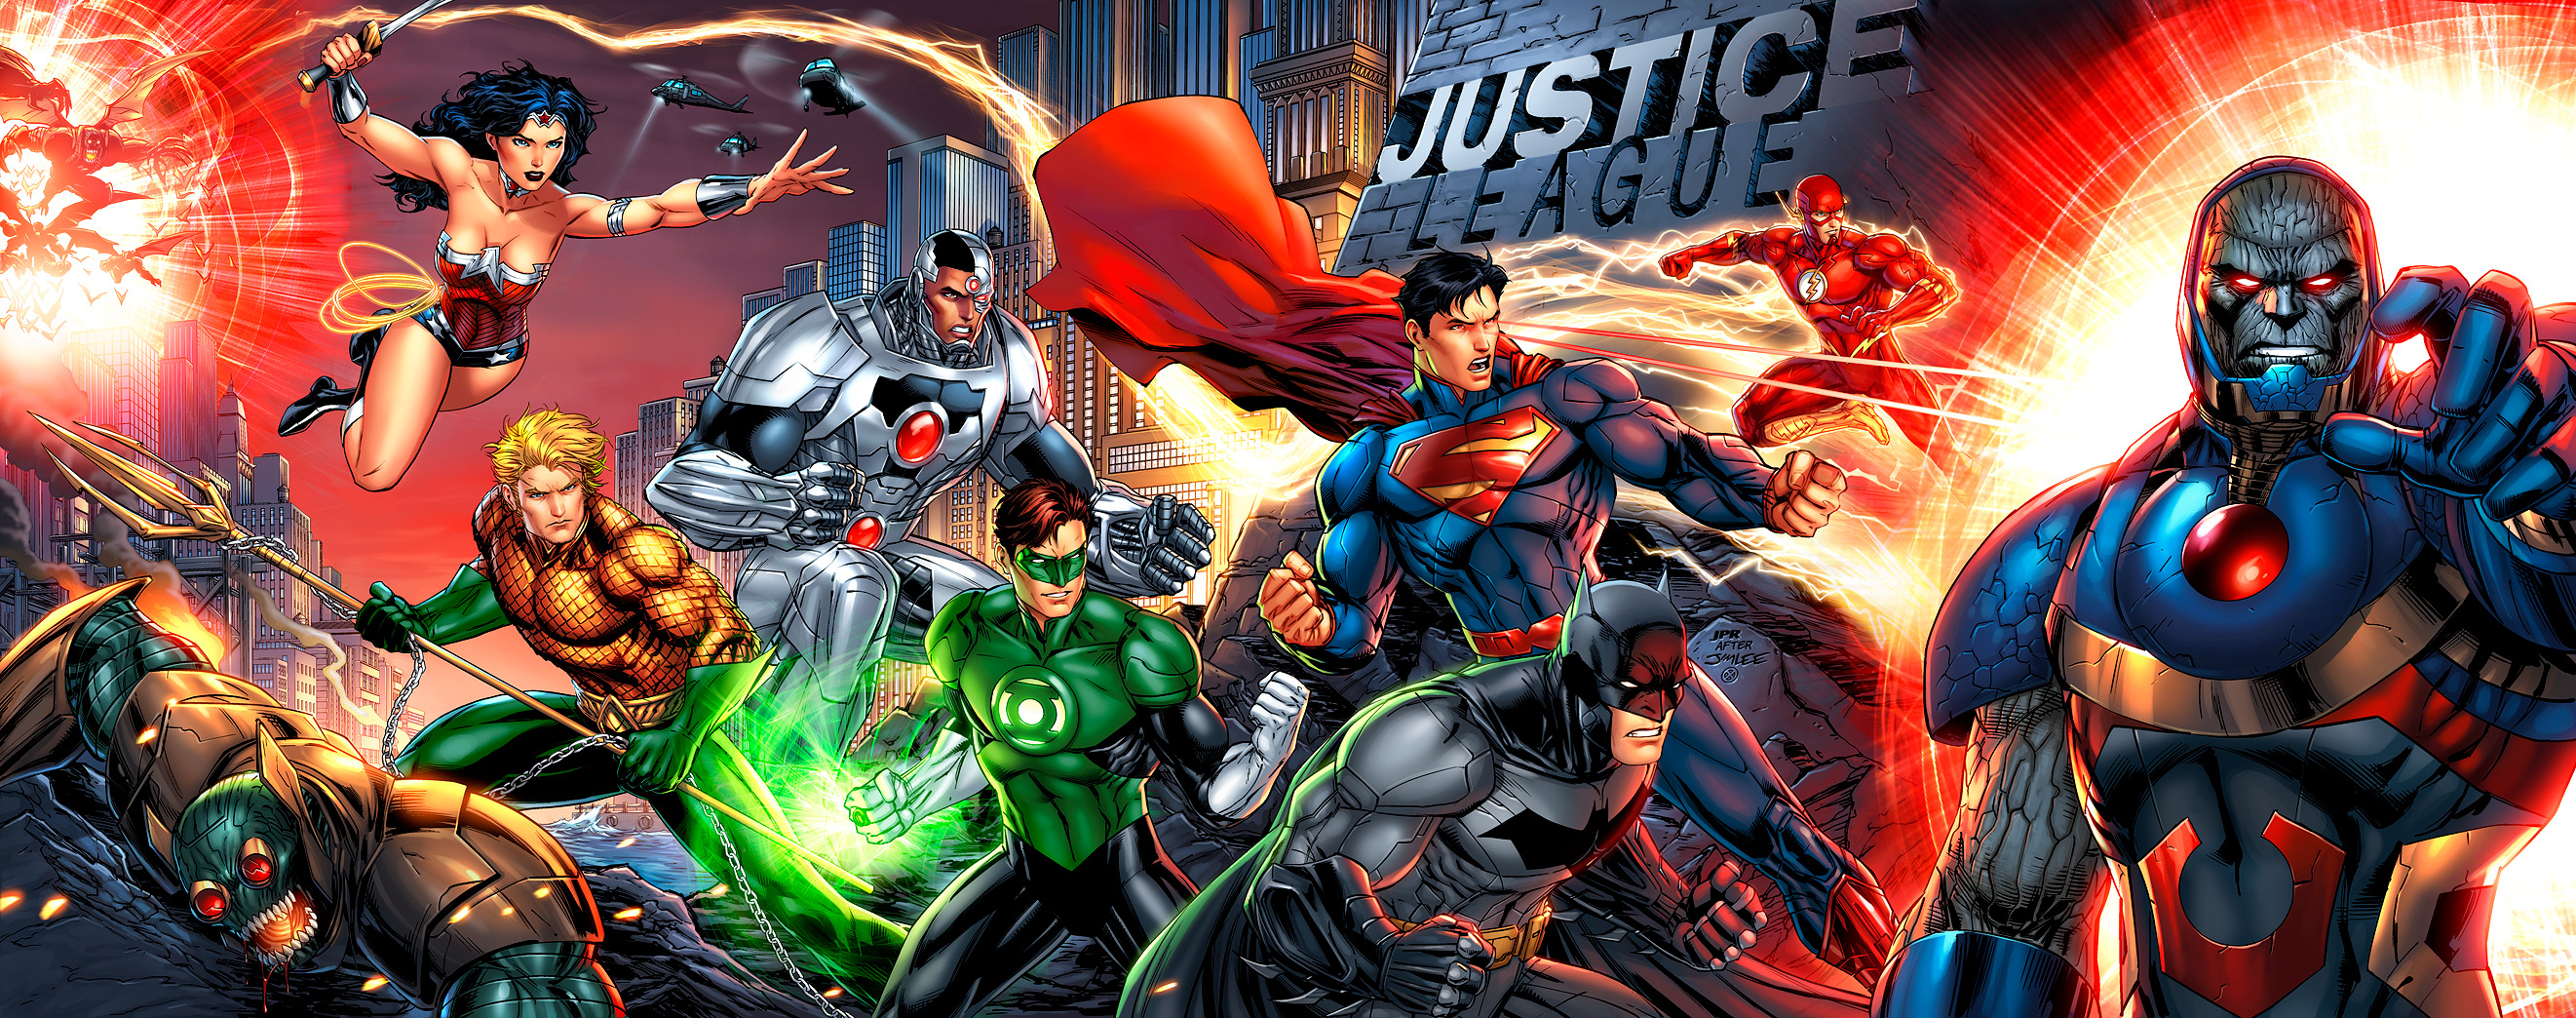 Thread Cool Jim LeeX Men homage via Justice League